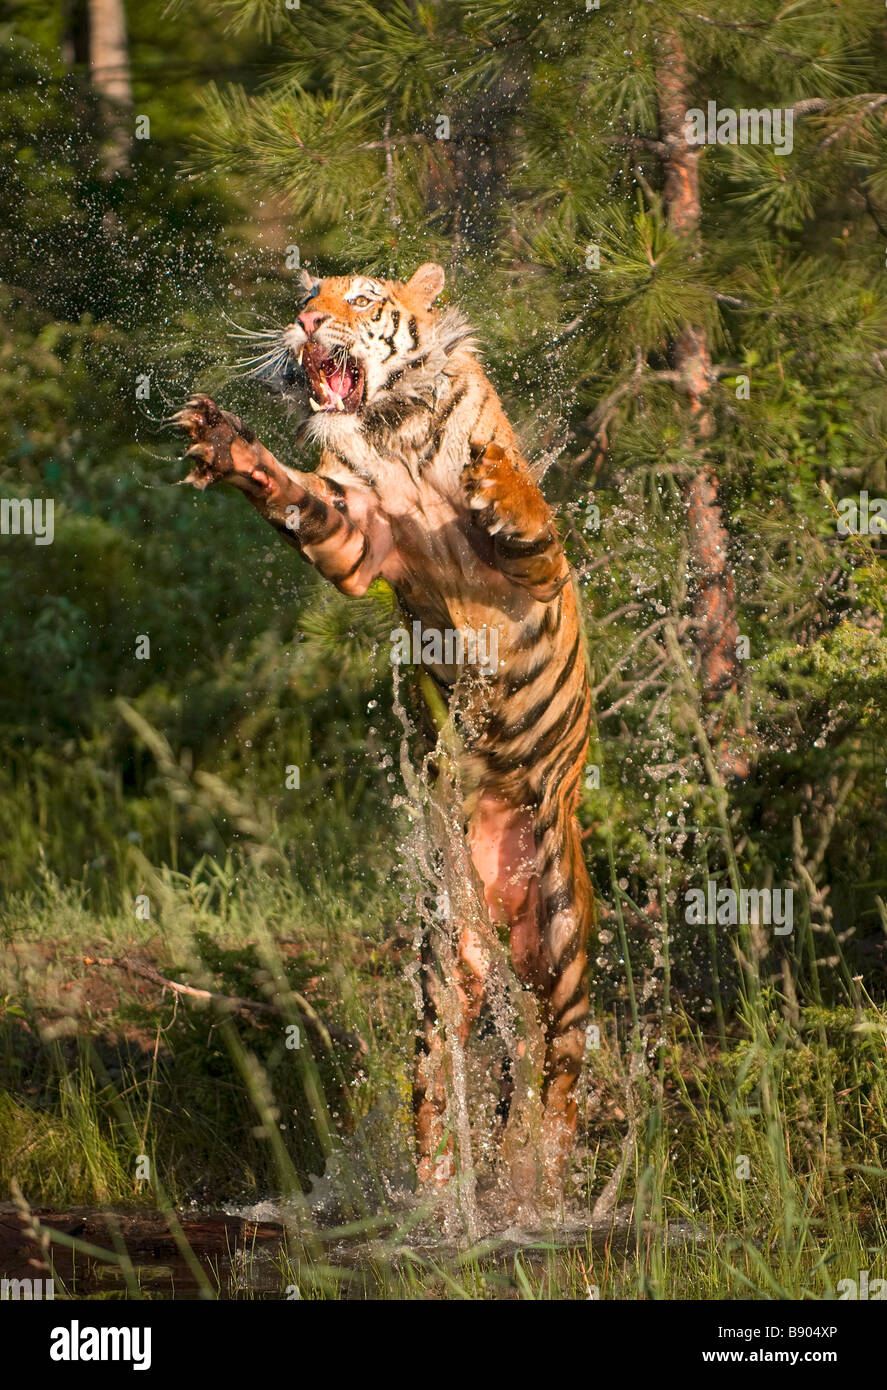 Tigre de Sibérie bondissant hors de l'eau d'un étang peu profond Banque D'Images